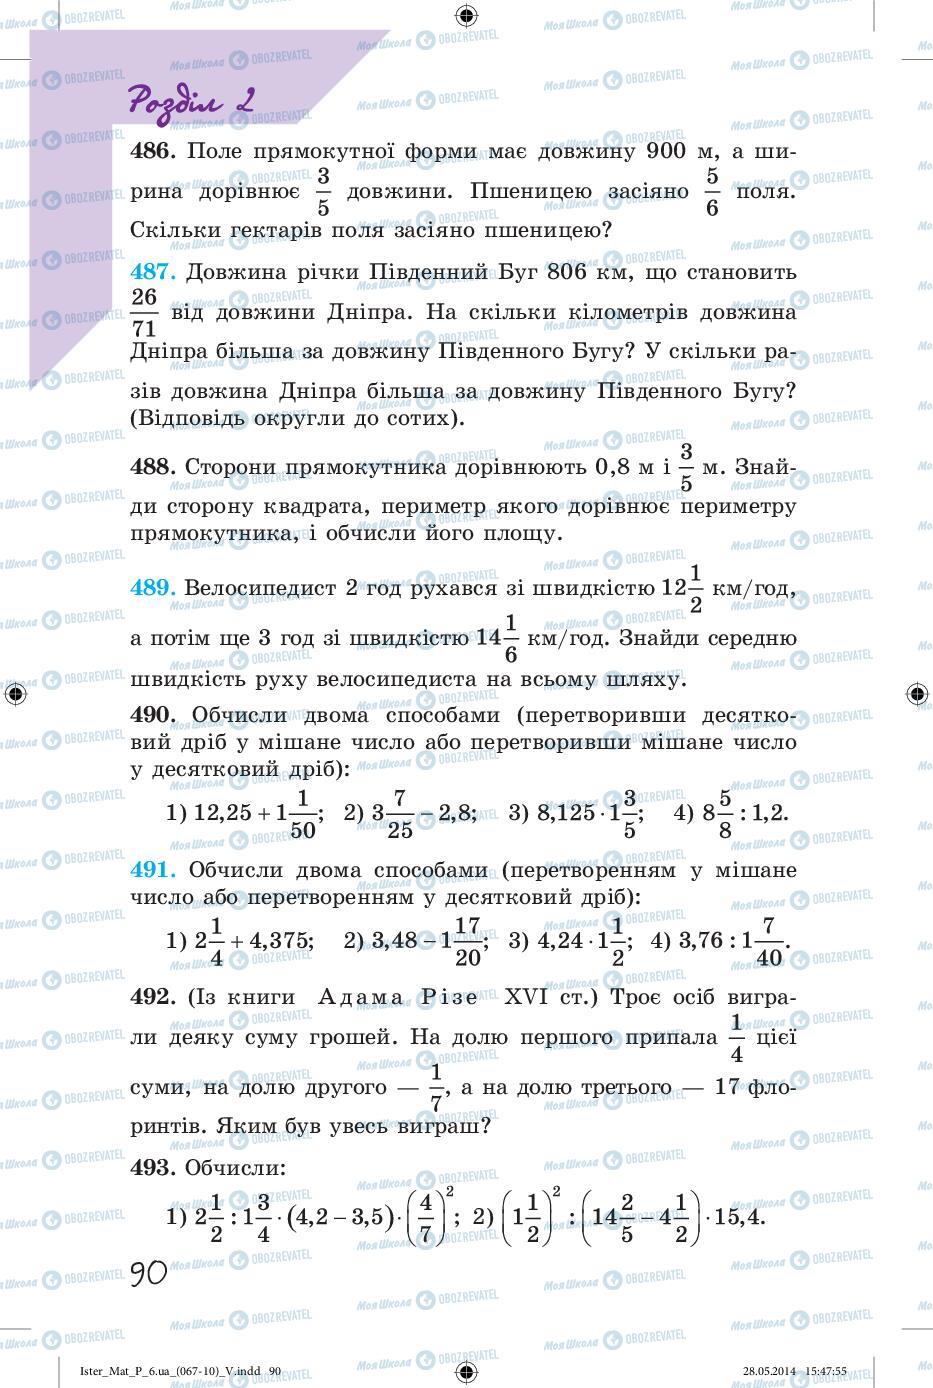 Учебники Математика 6 класс страница 90